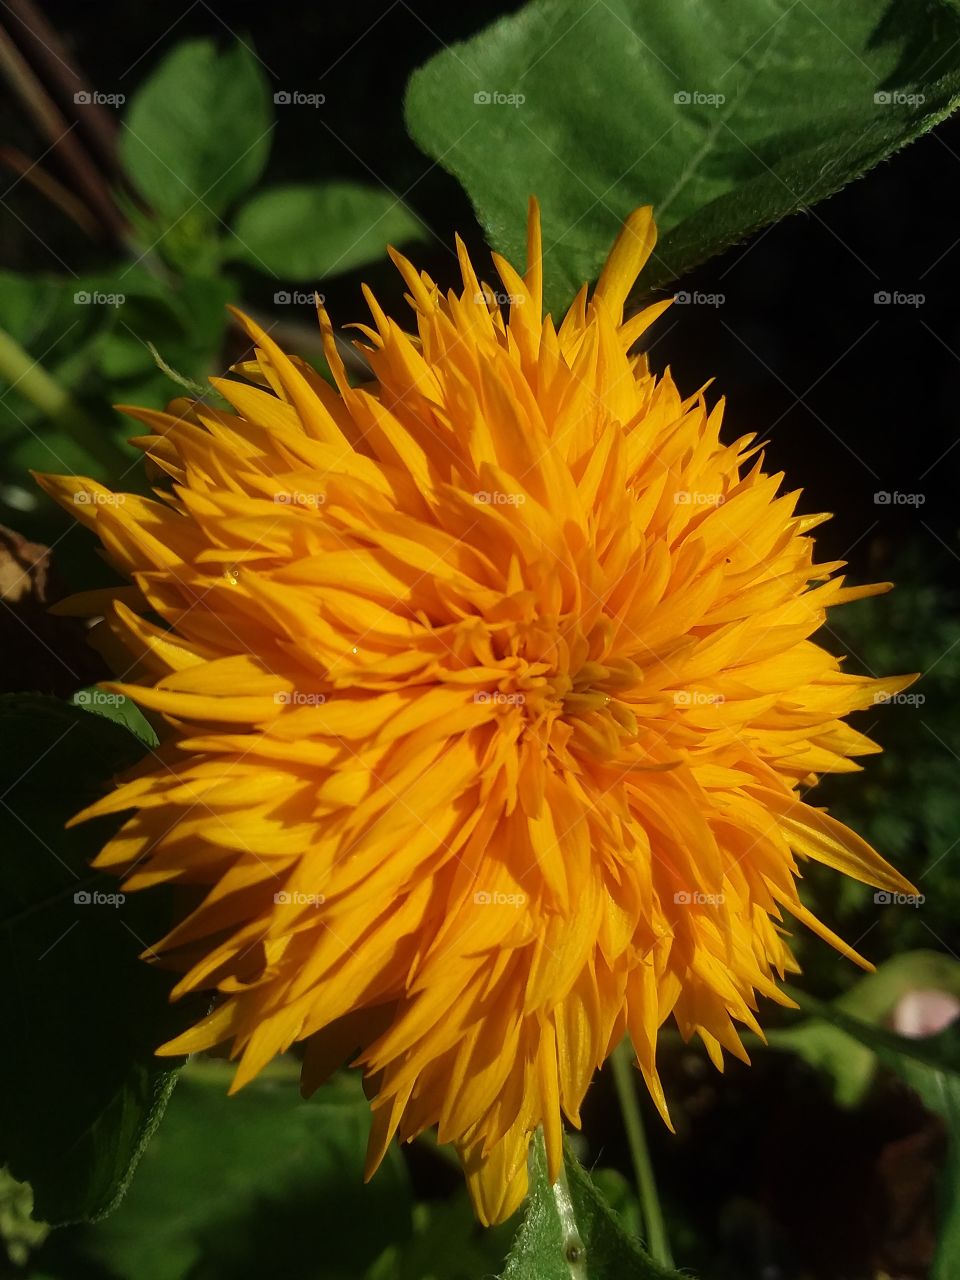 Sunflower. Macro close up photography. Alabama, USA. June flower in bloom.